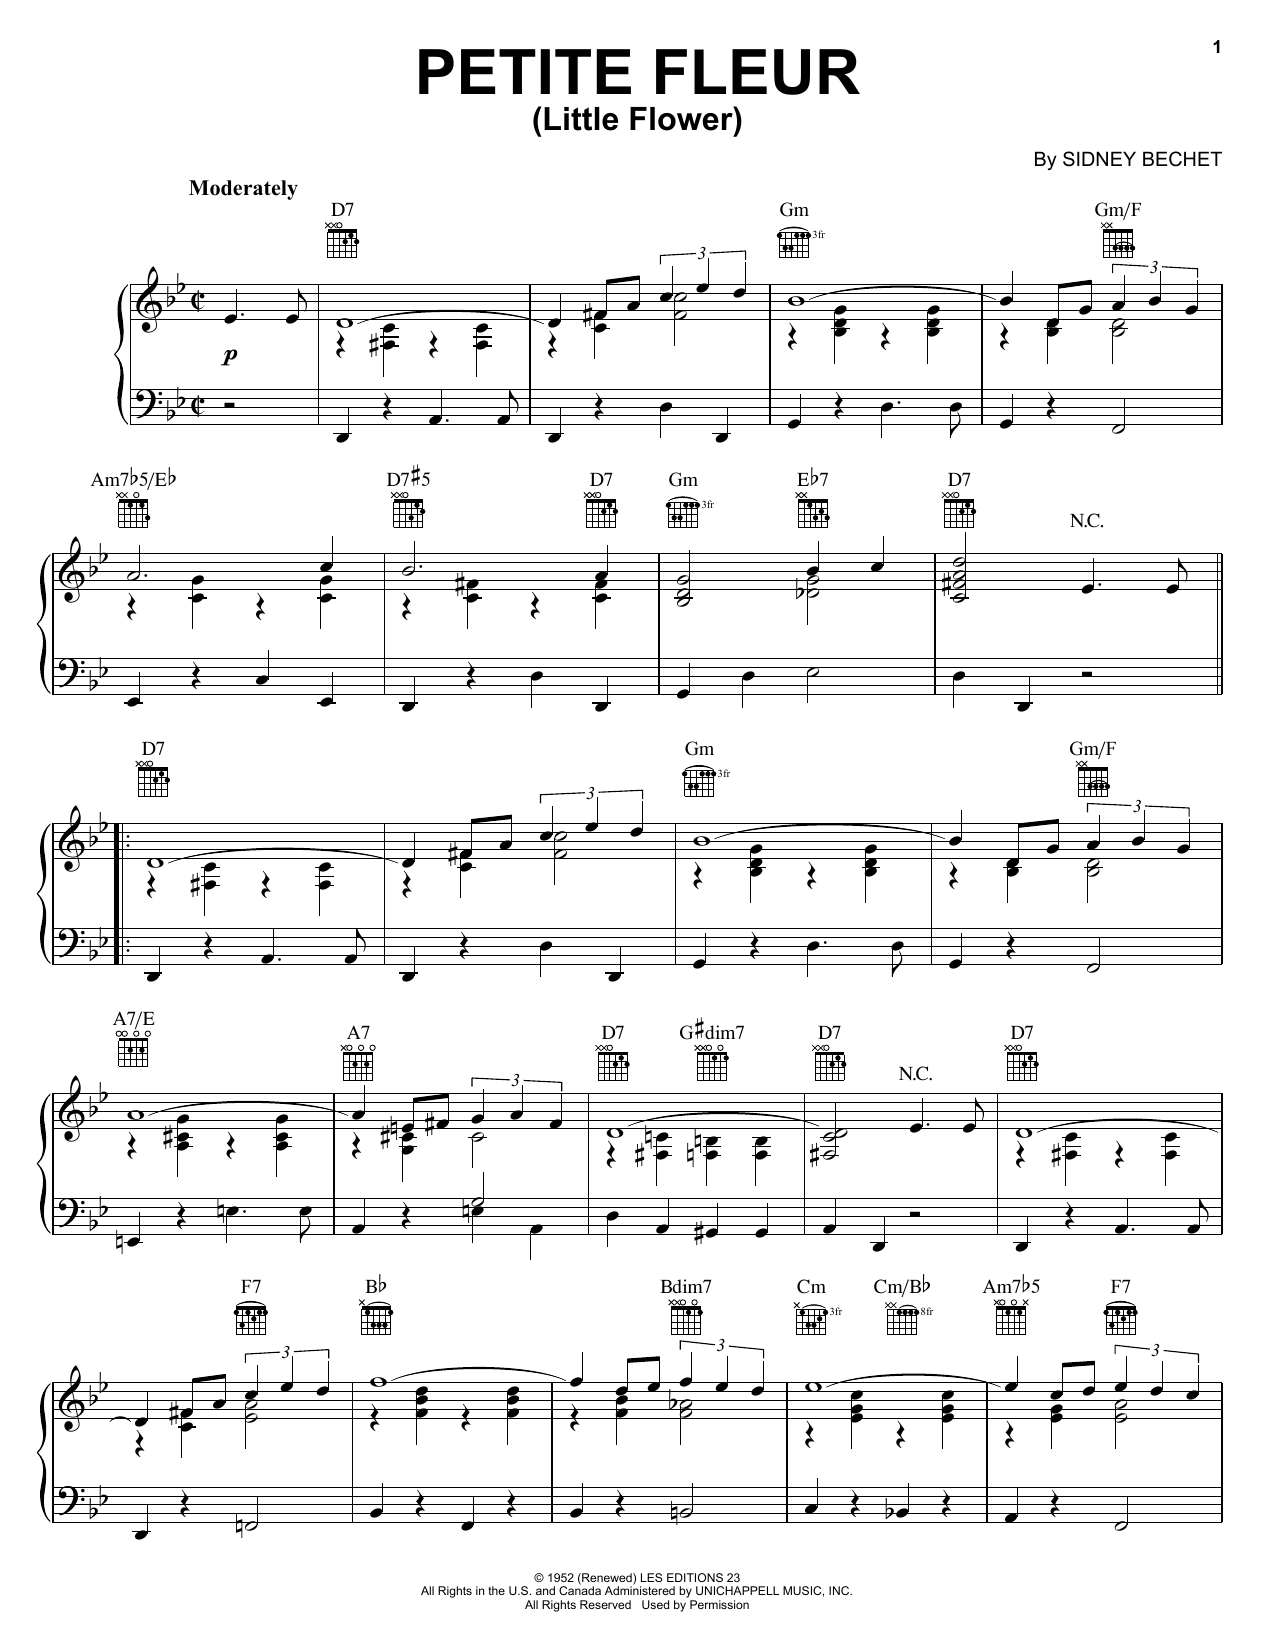 Sidney Bechet Petite Fleur (Little Flower) Sheet Music Notes & Chords for Clarinet - Download or Print PDF